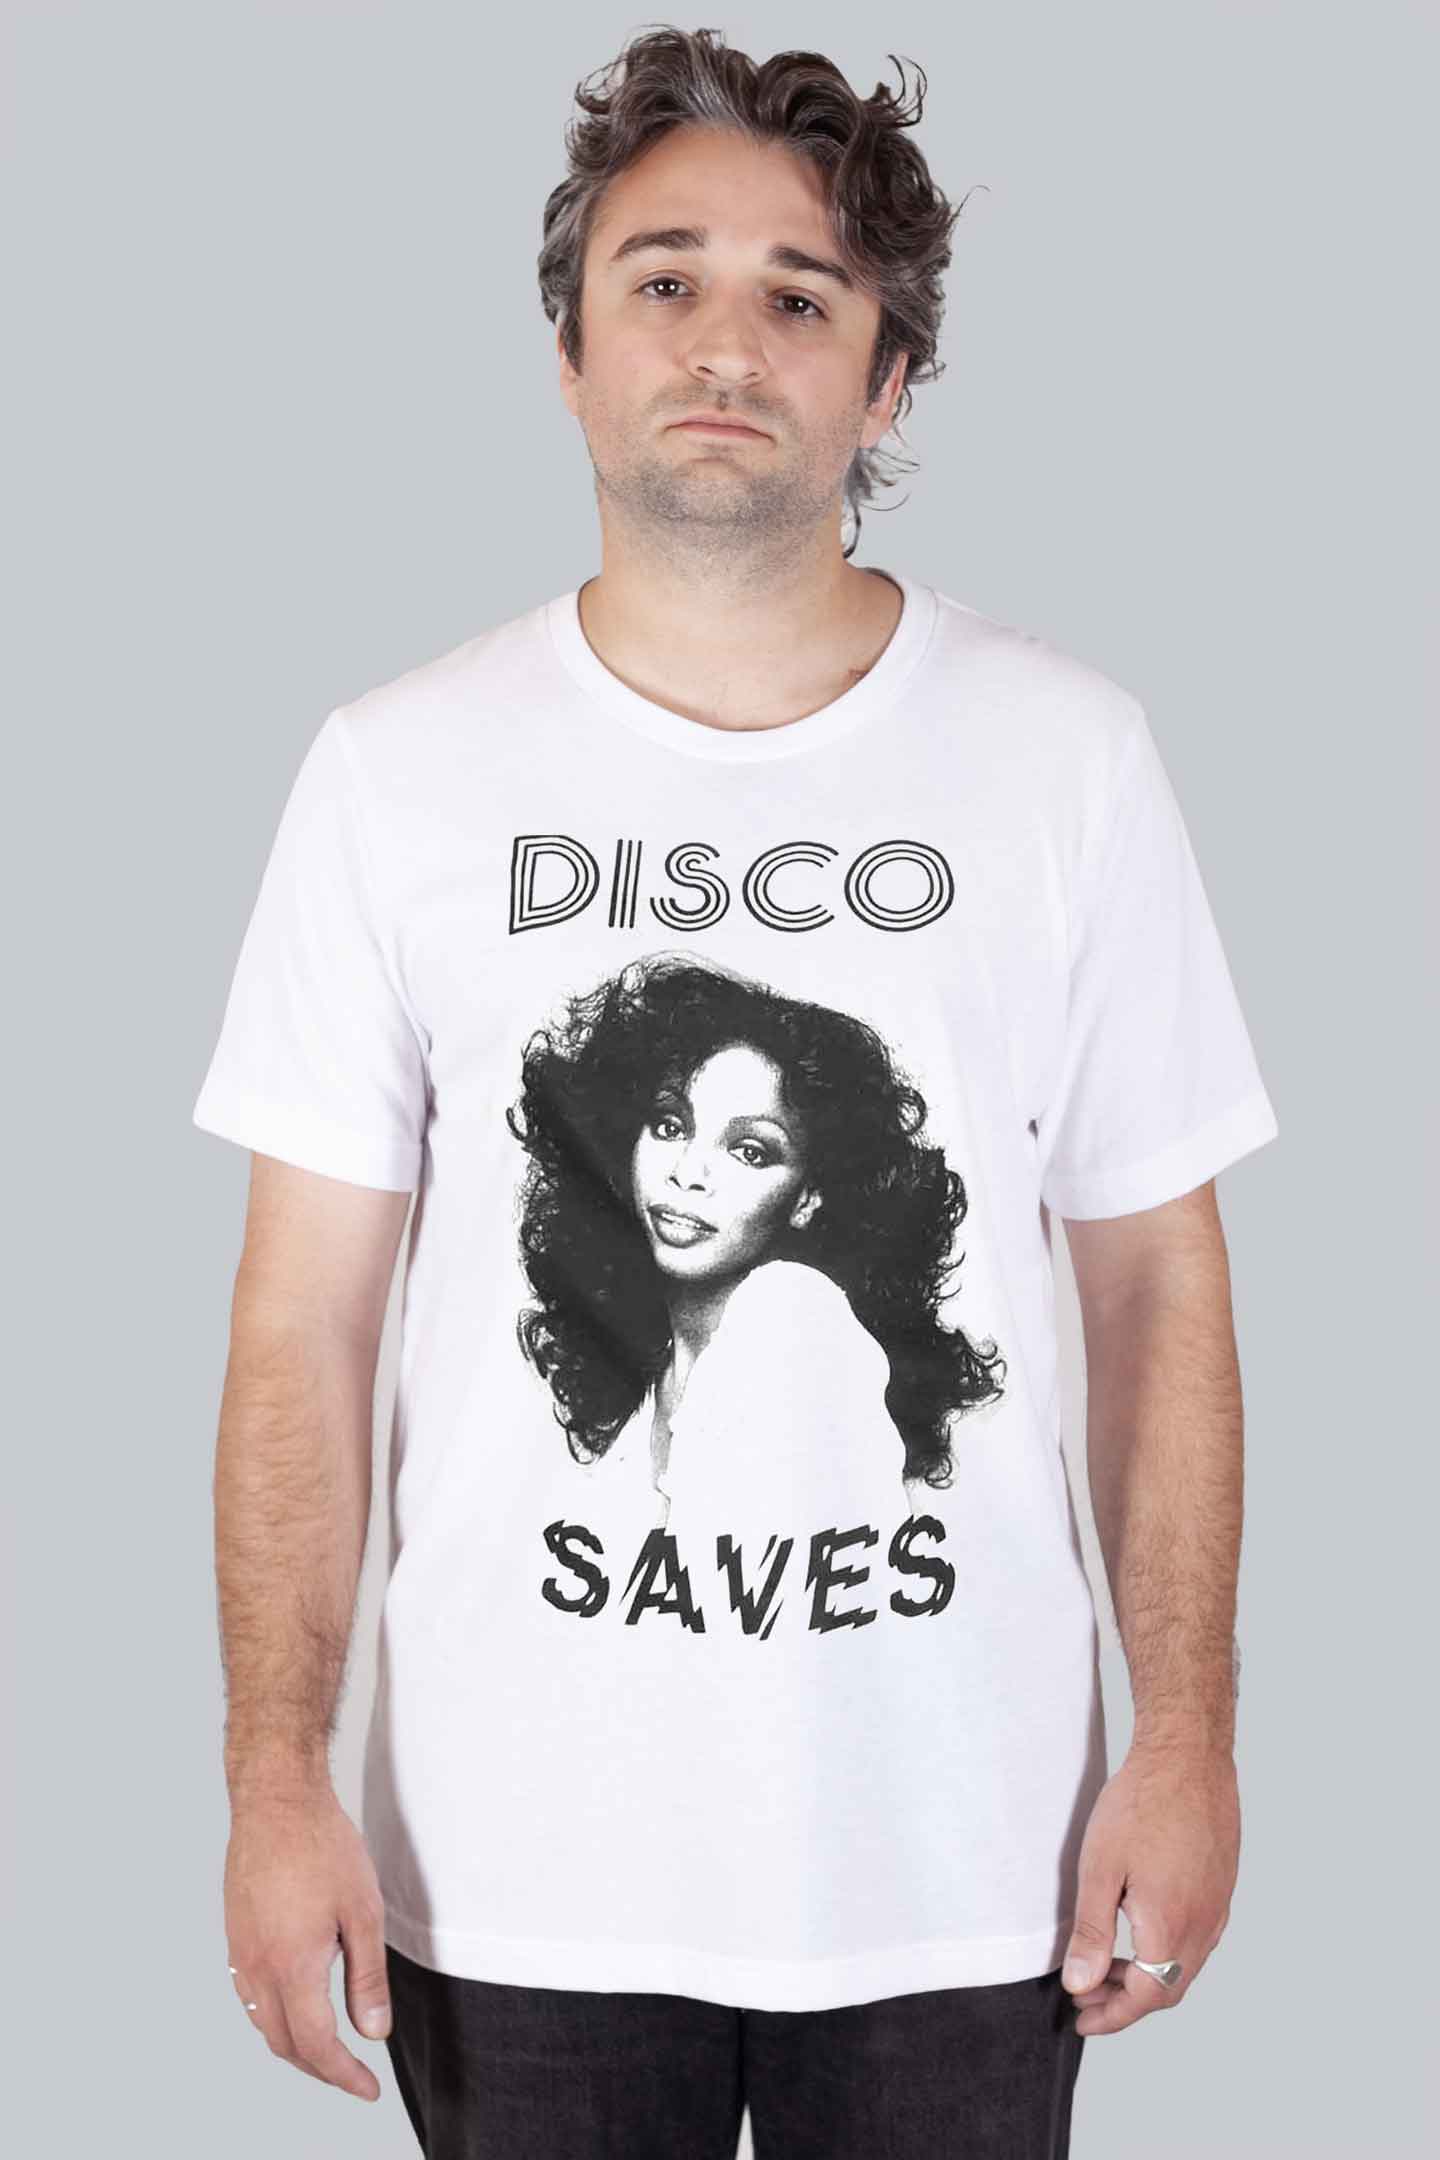 FM Donna Summer "Disco Saves" Tee - white